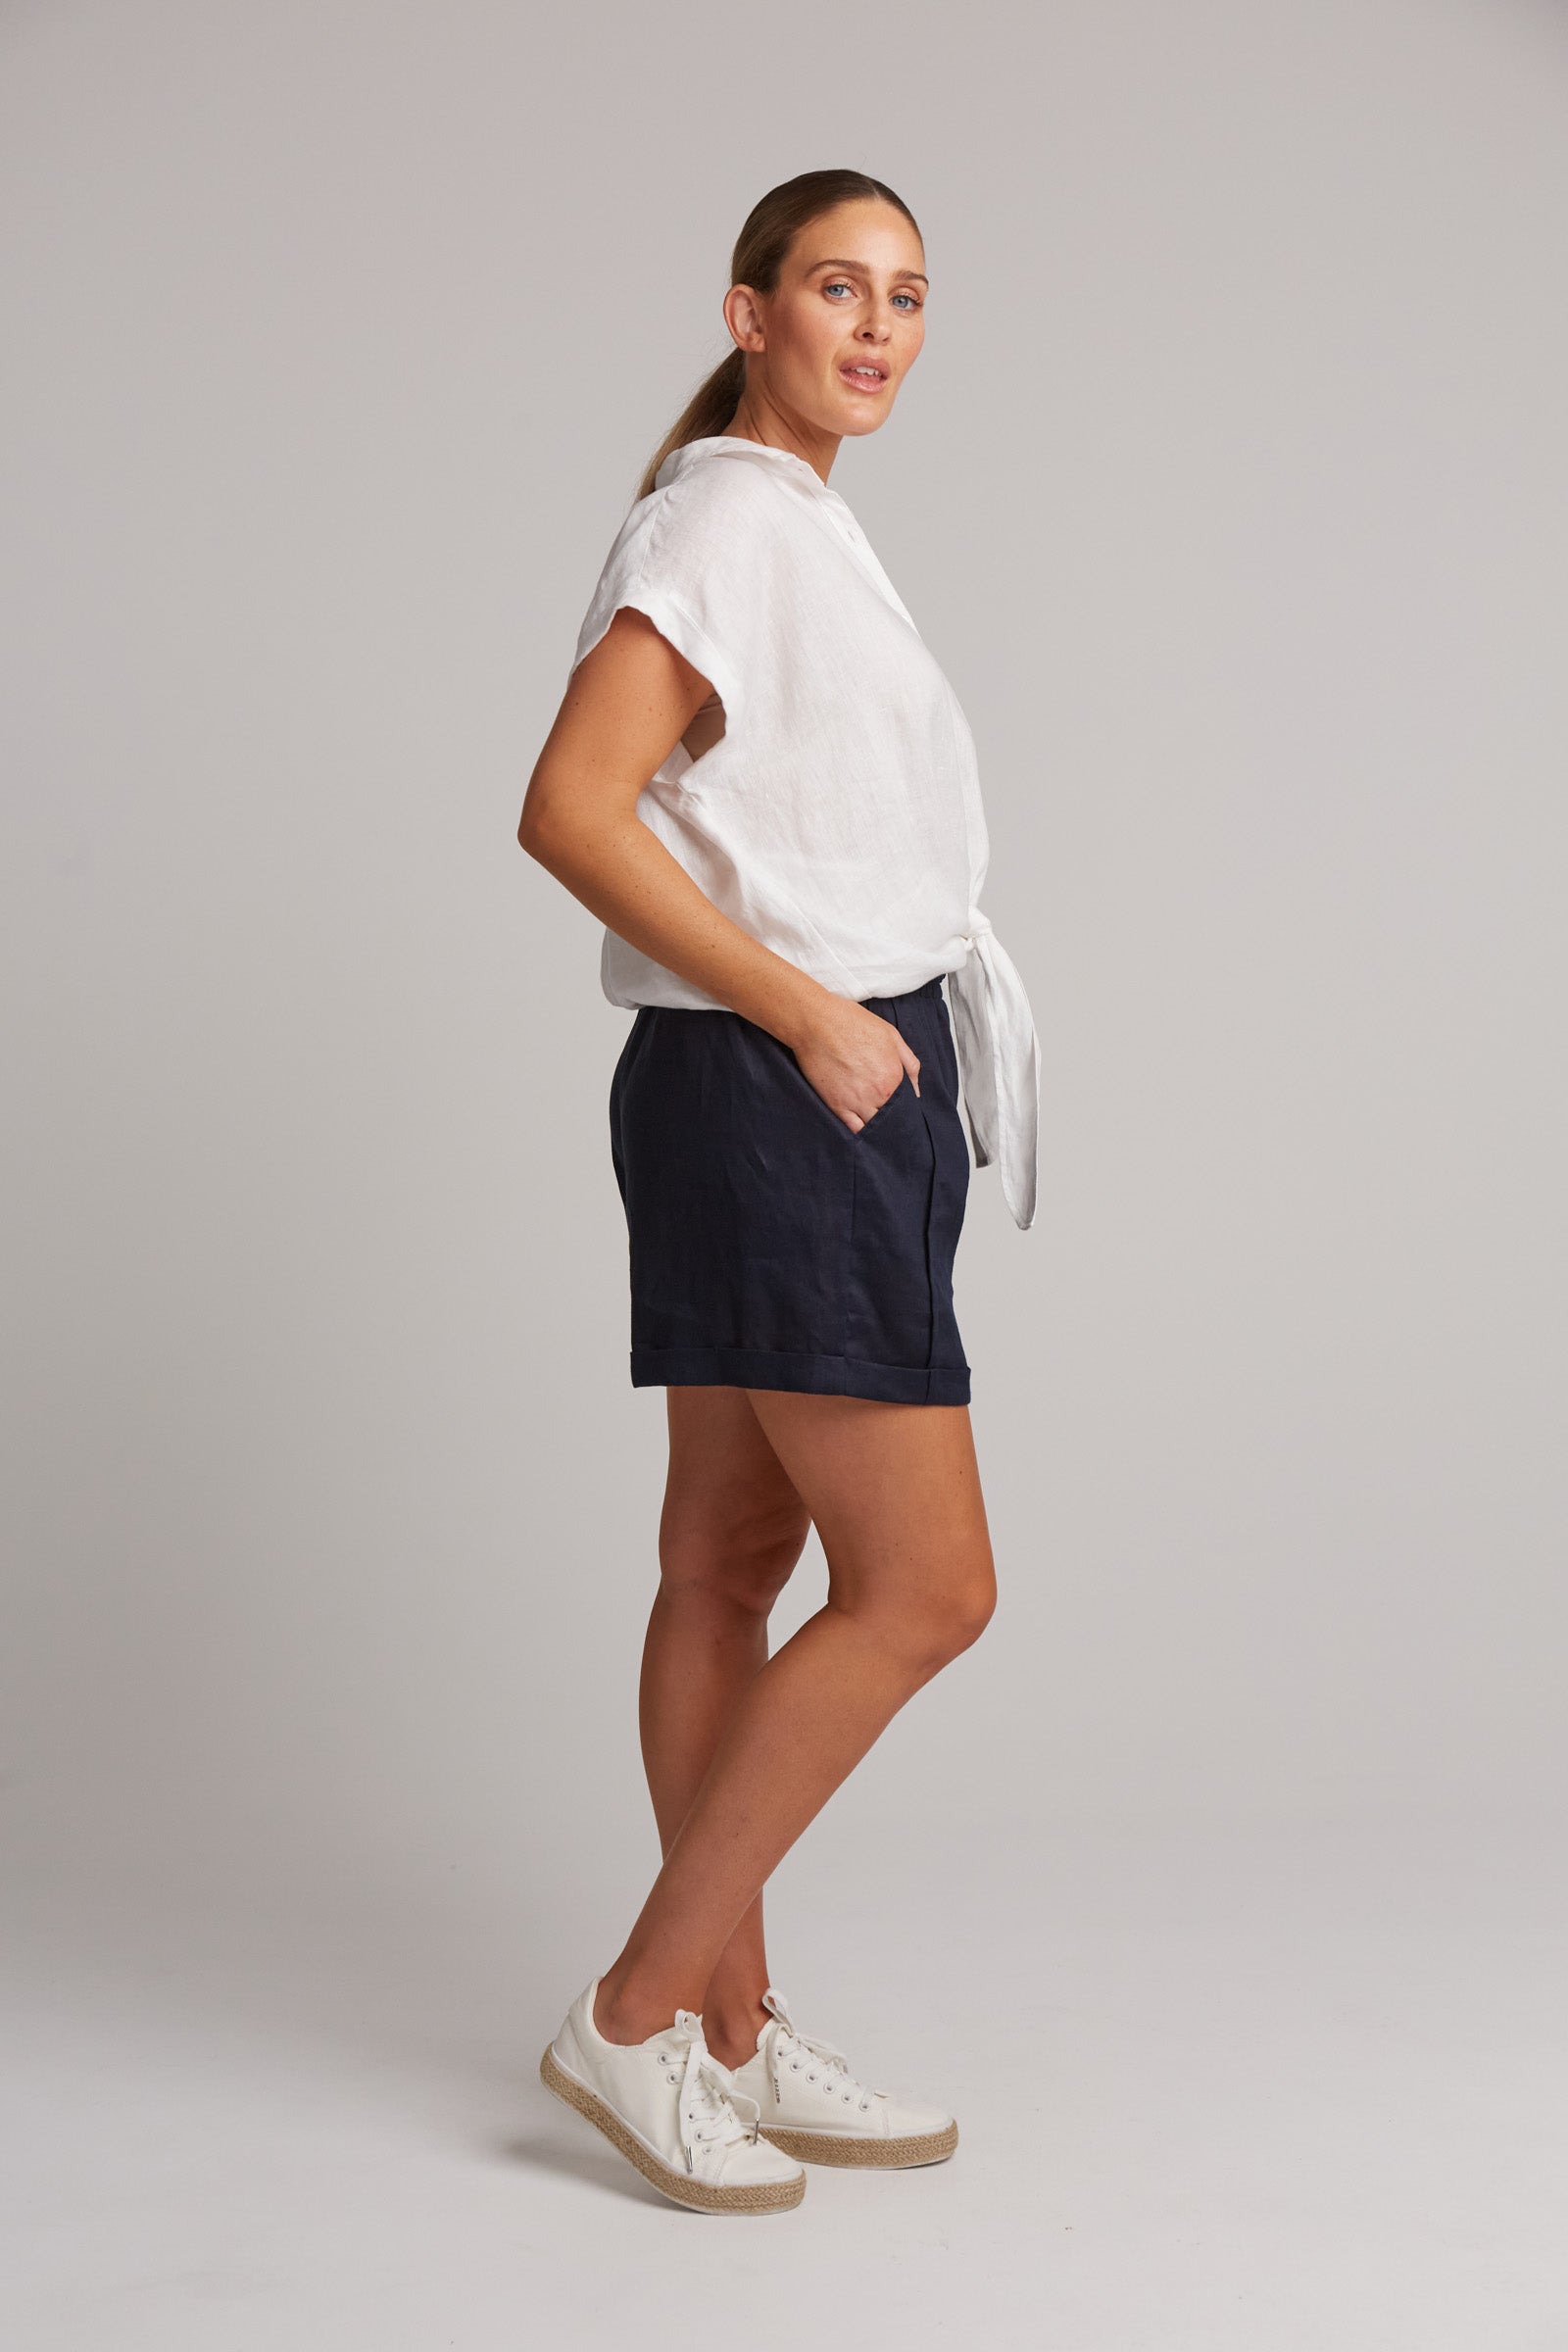 Studio Tie Shirt - Salt - eb&ive Clothing - Shirt S/S Linen One Size